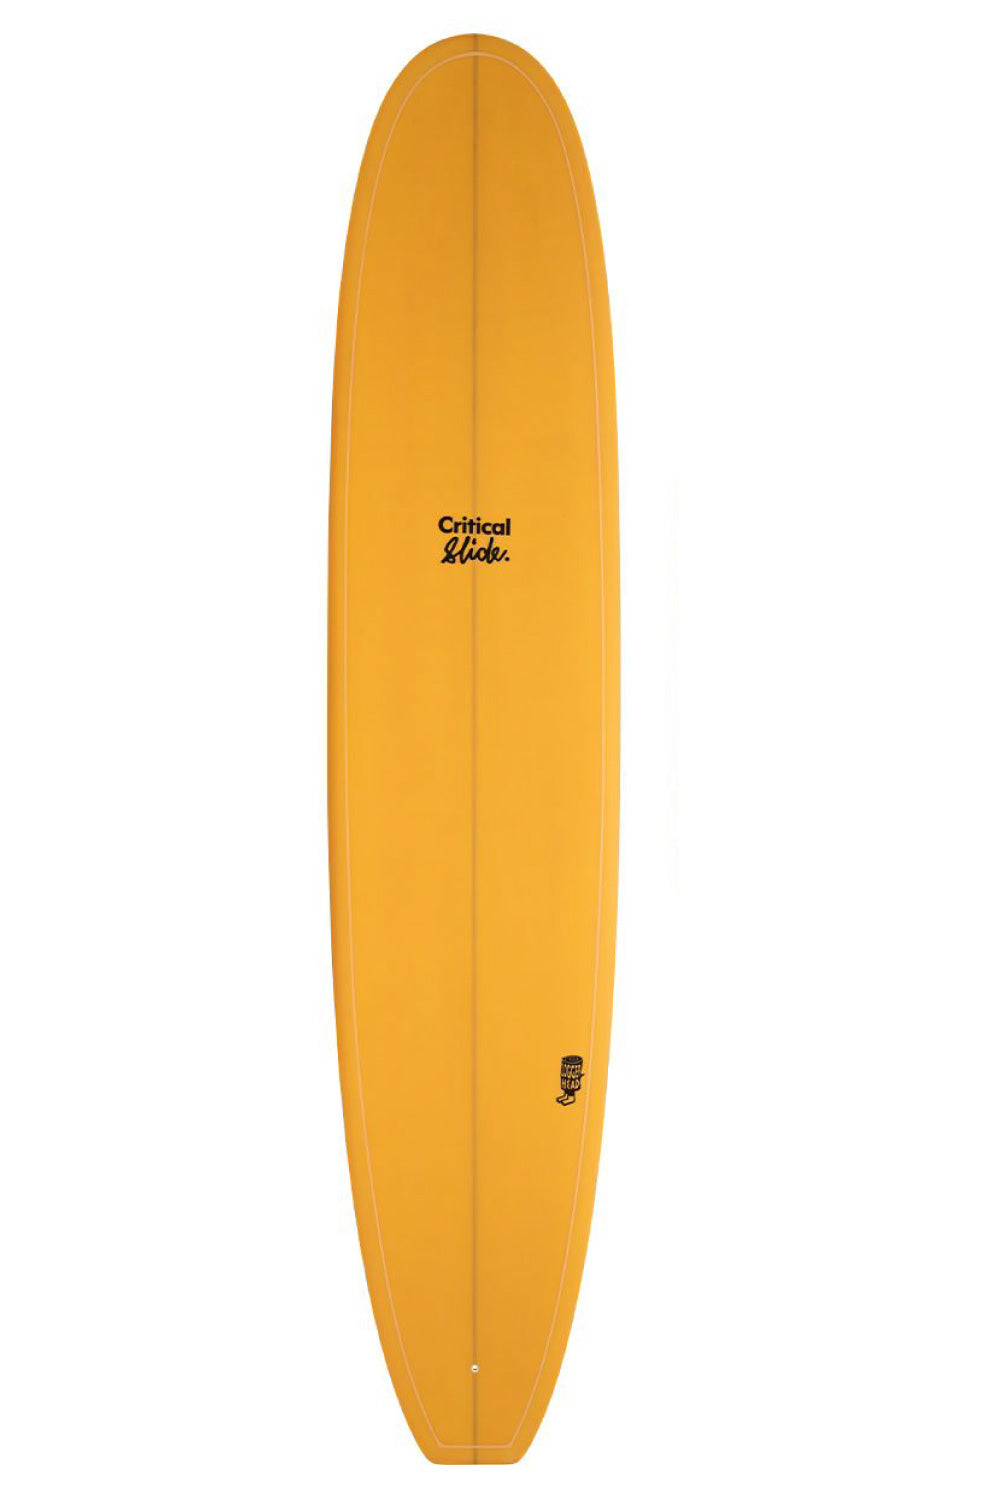 The Critical Slide Society Loggerhead PU Longboard Surfboard